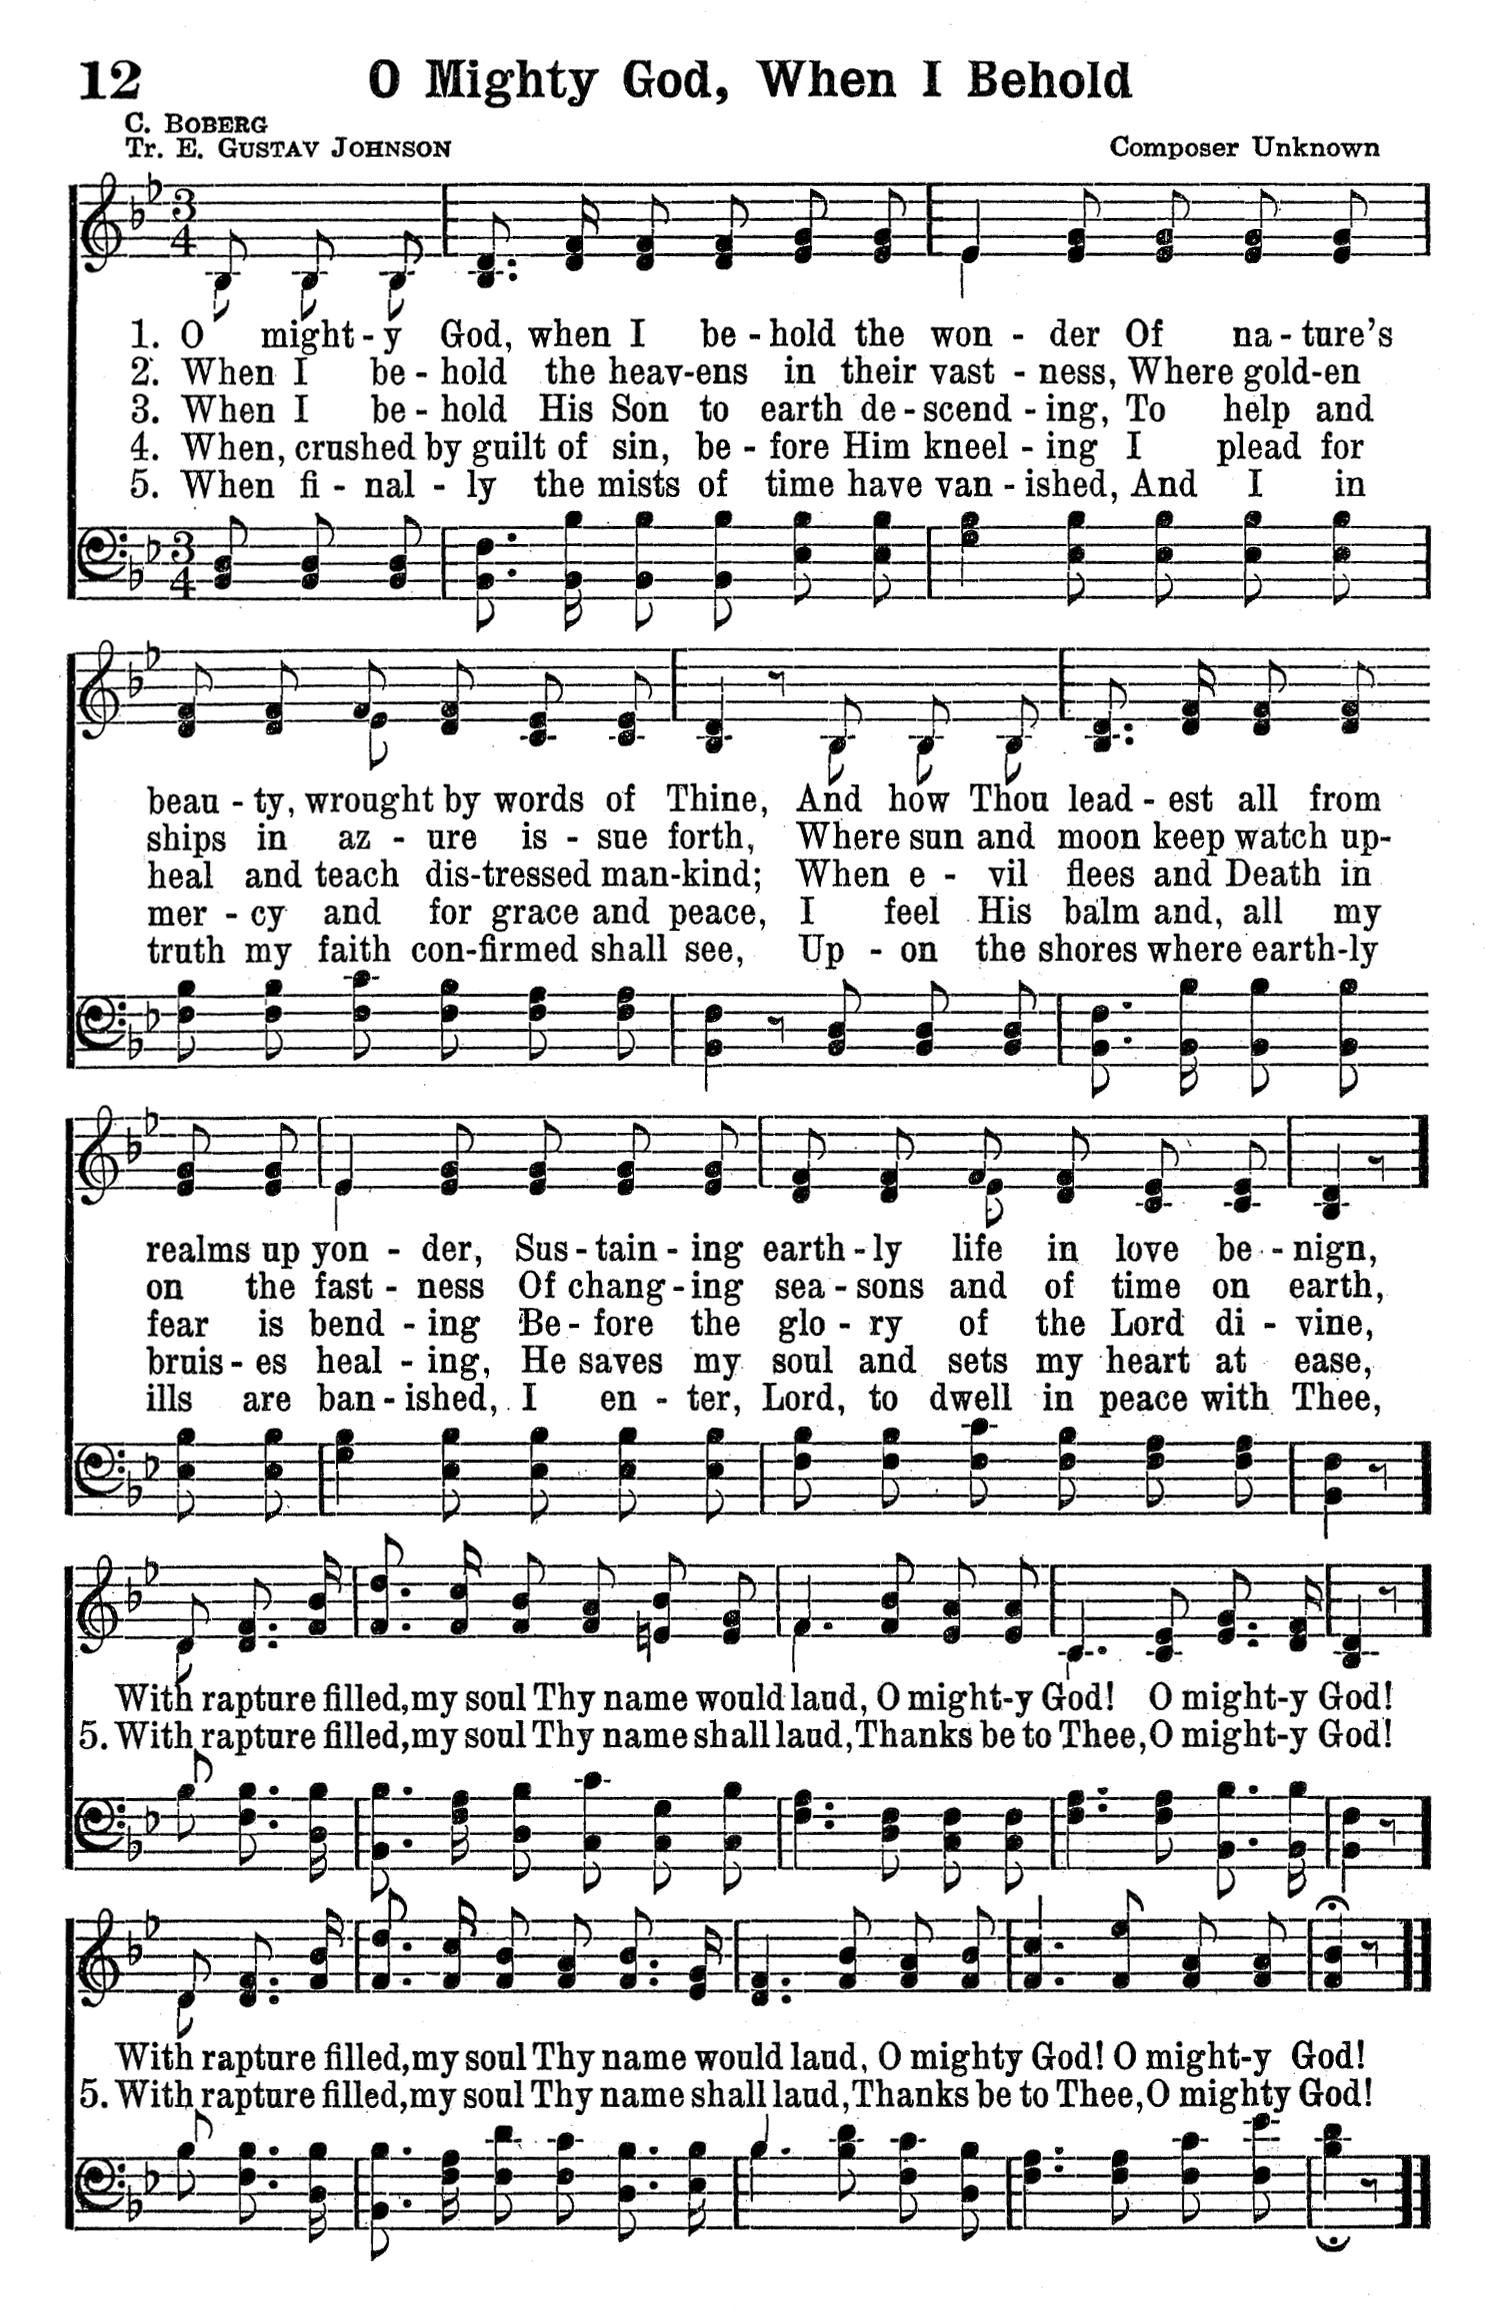 How Great Thou Art Hymn – BEECHDALE FRAMES